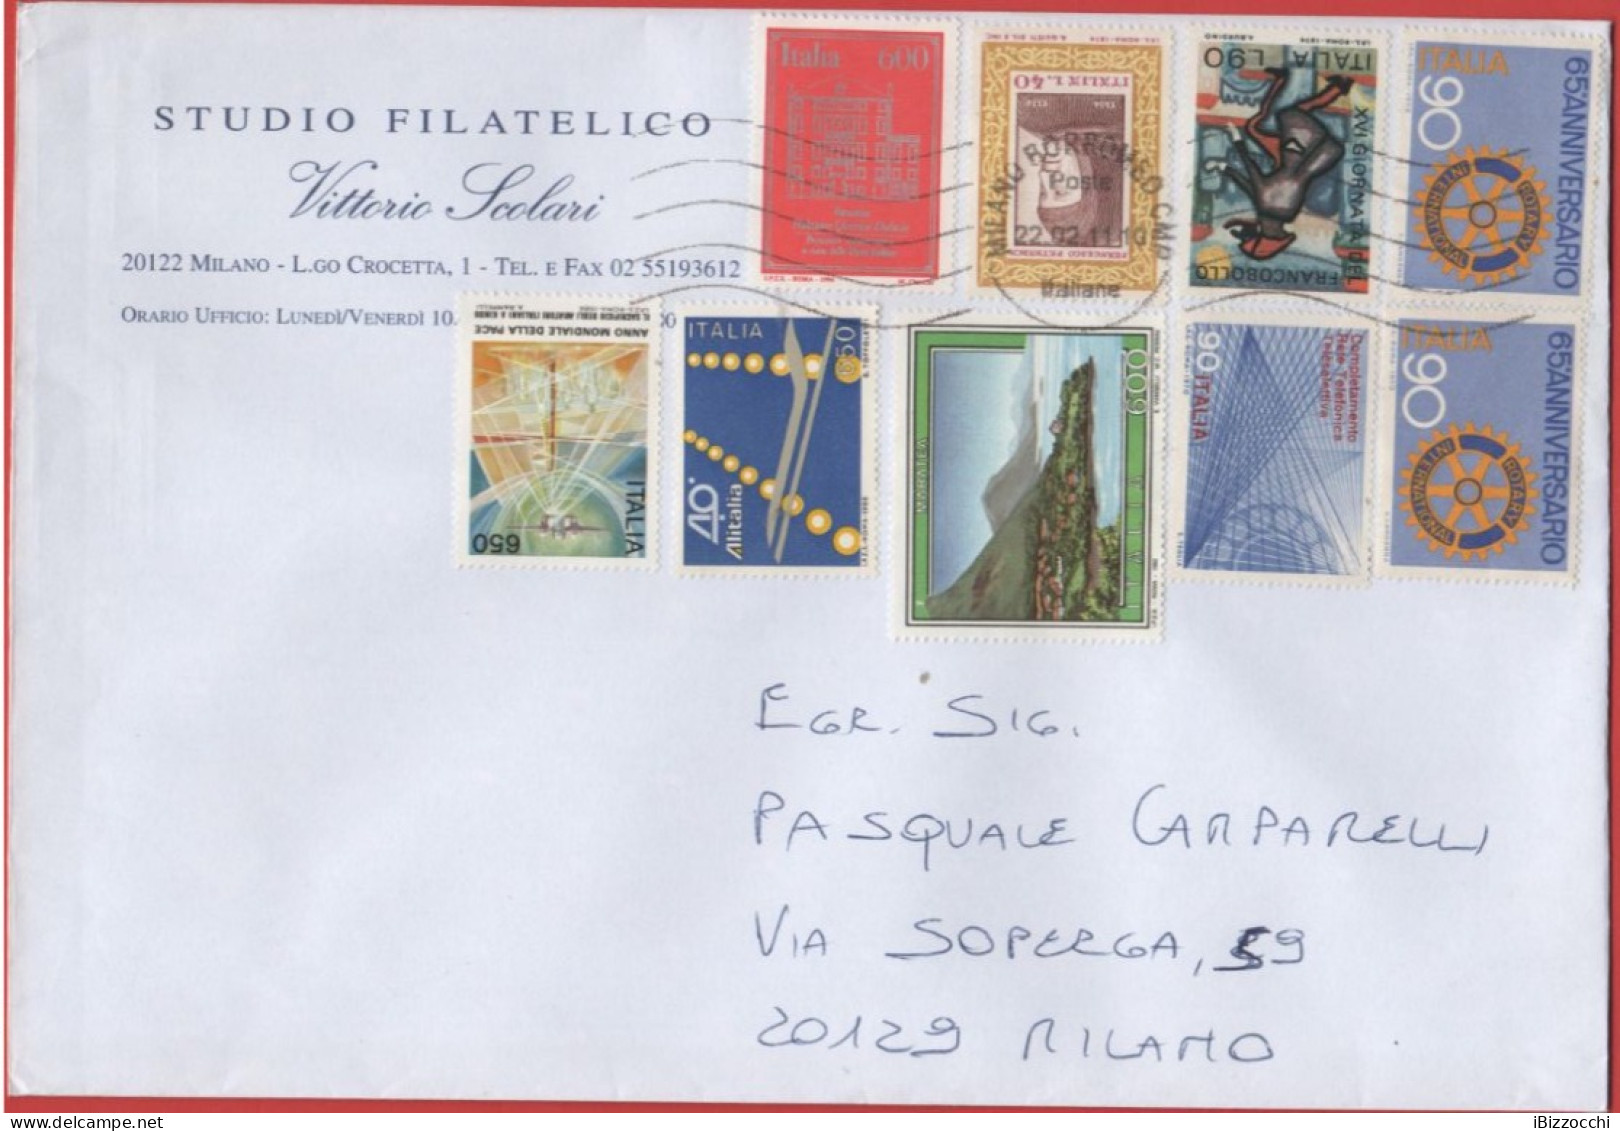 ITALIA - Storia Postale Repubblica - 2011 - 9 Francobolli Dal 1974 Al 1994 - Studio Filatelico Scolari Vittorio - Viaggi - 2011-20: Poststempel